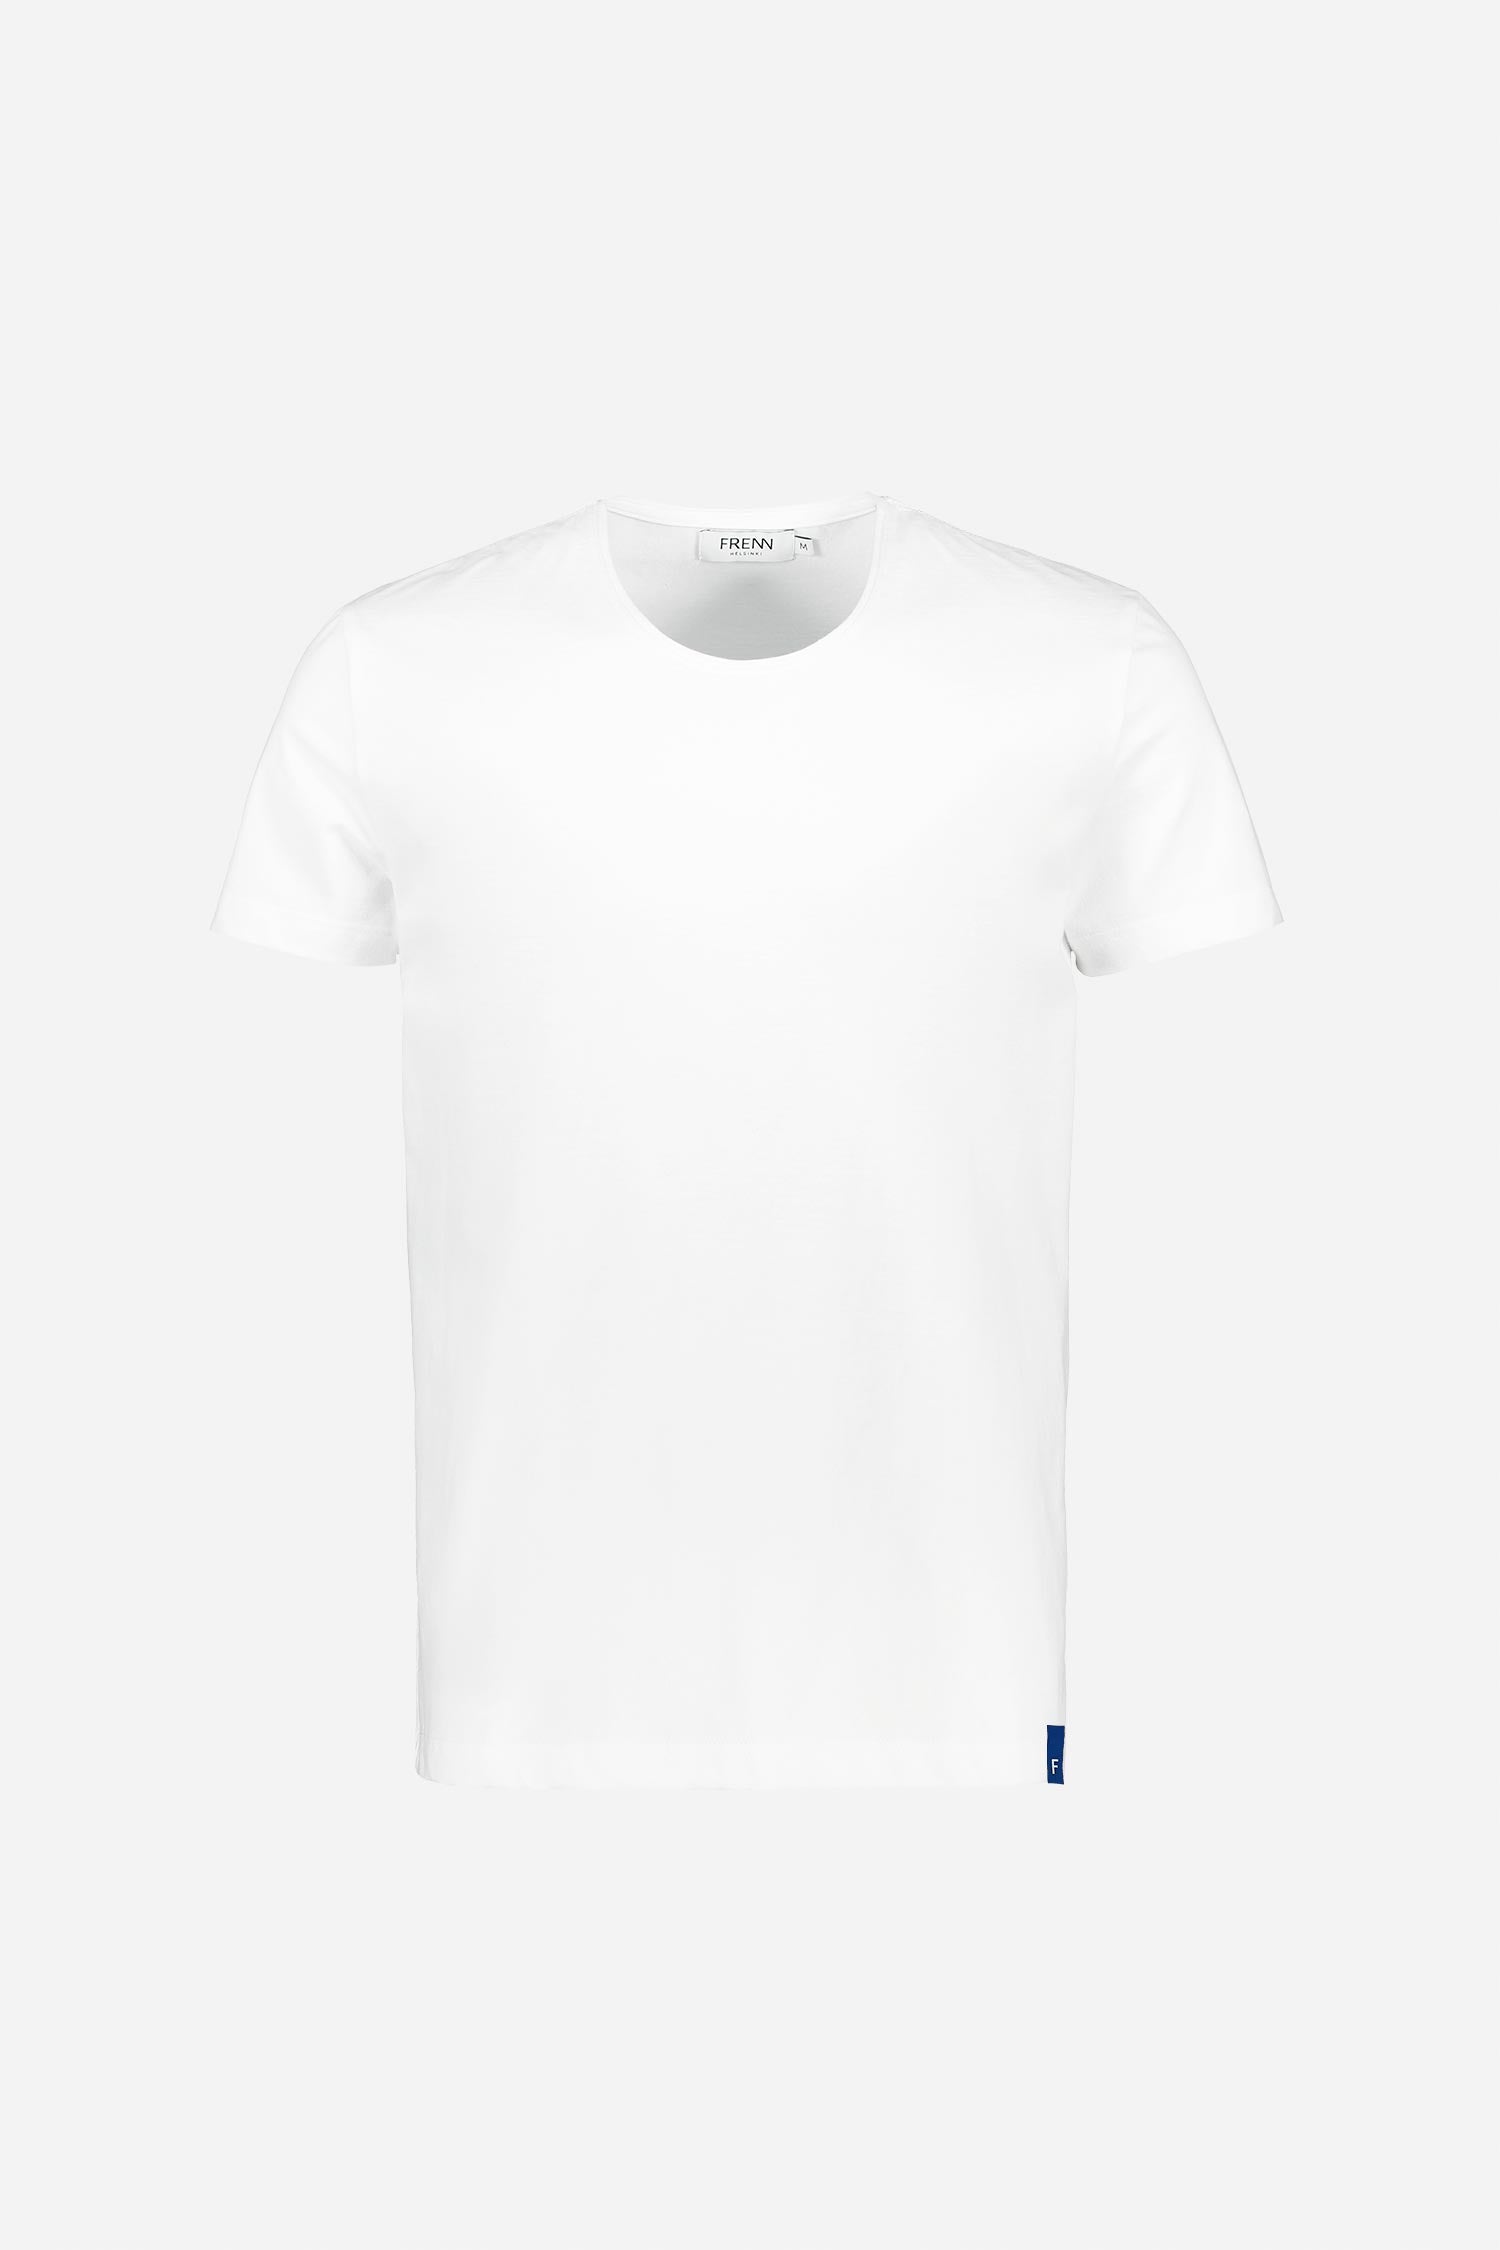 HENRI – white t-shirt made from GOTS certified organic cotton